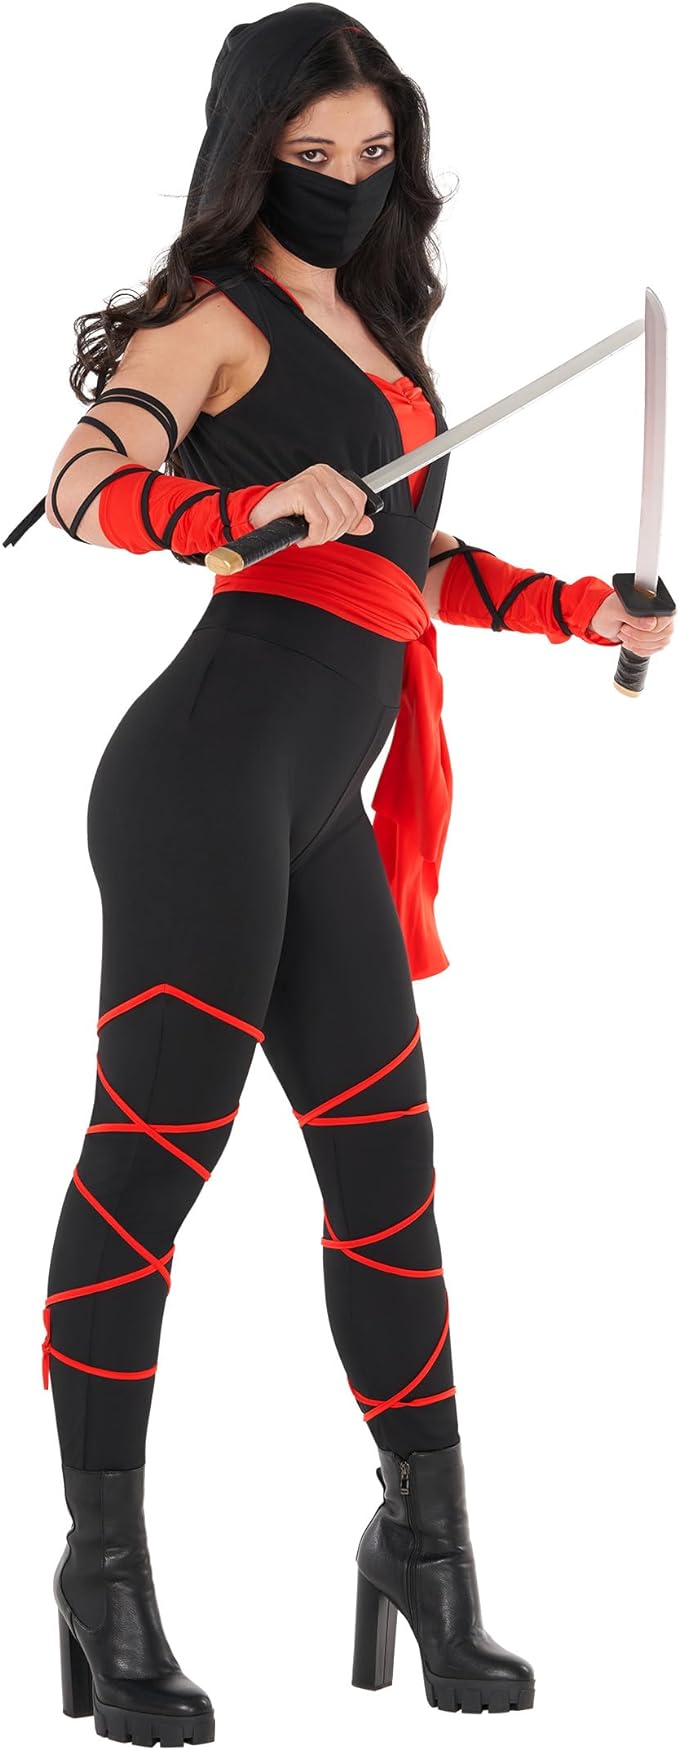 Ninja Woman Costume: Unleashing the Power and Elegance in Martial Arts Fashion插图1